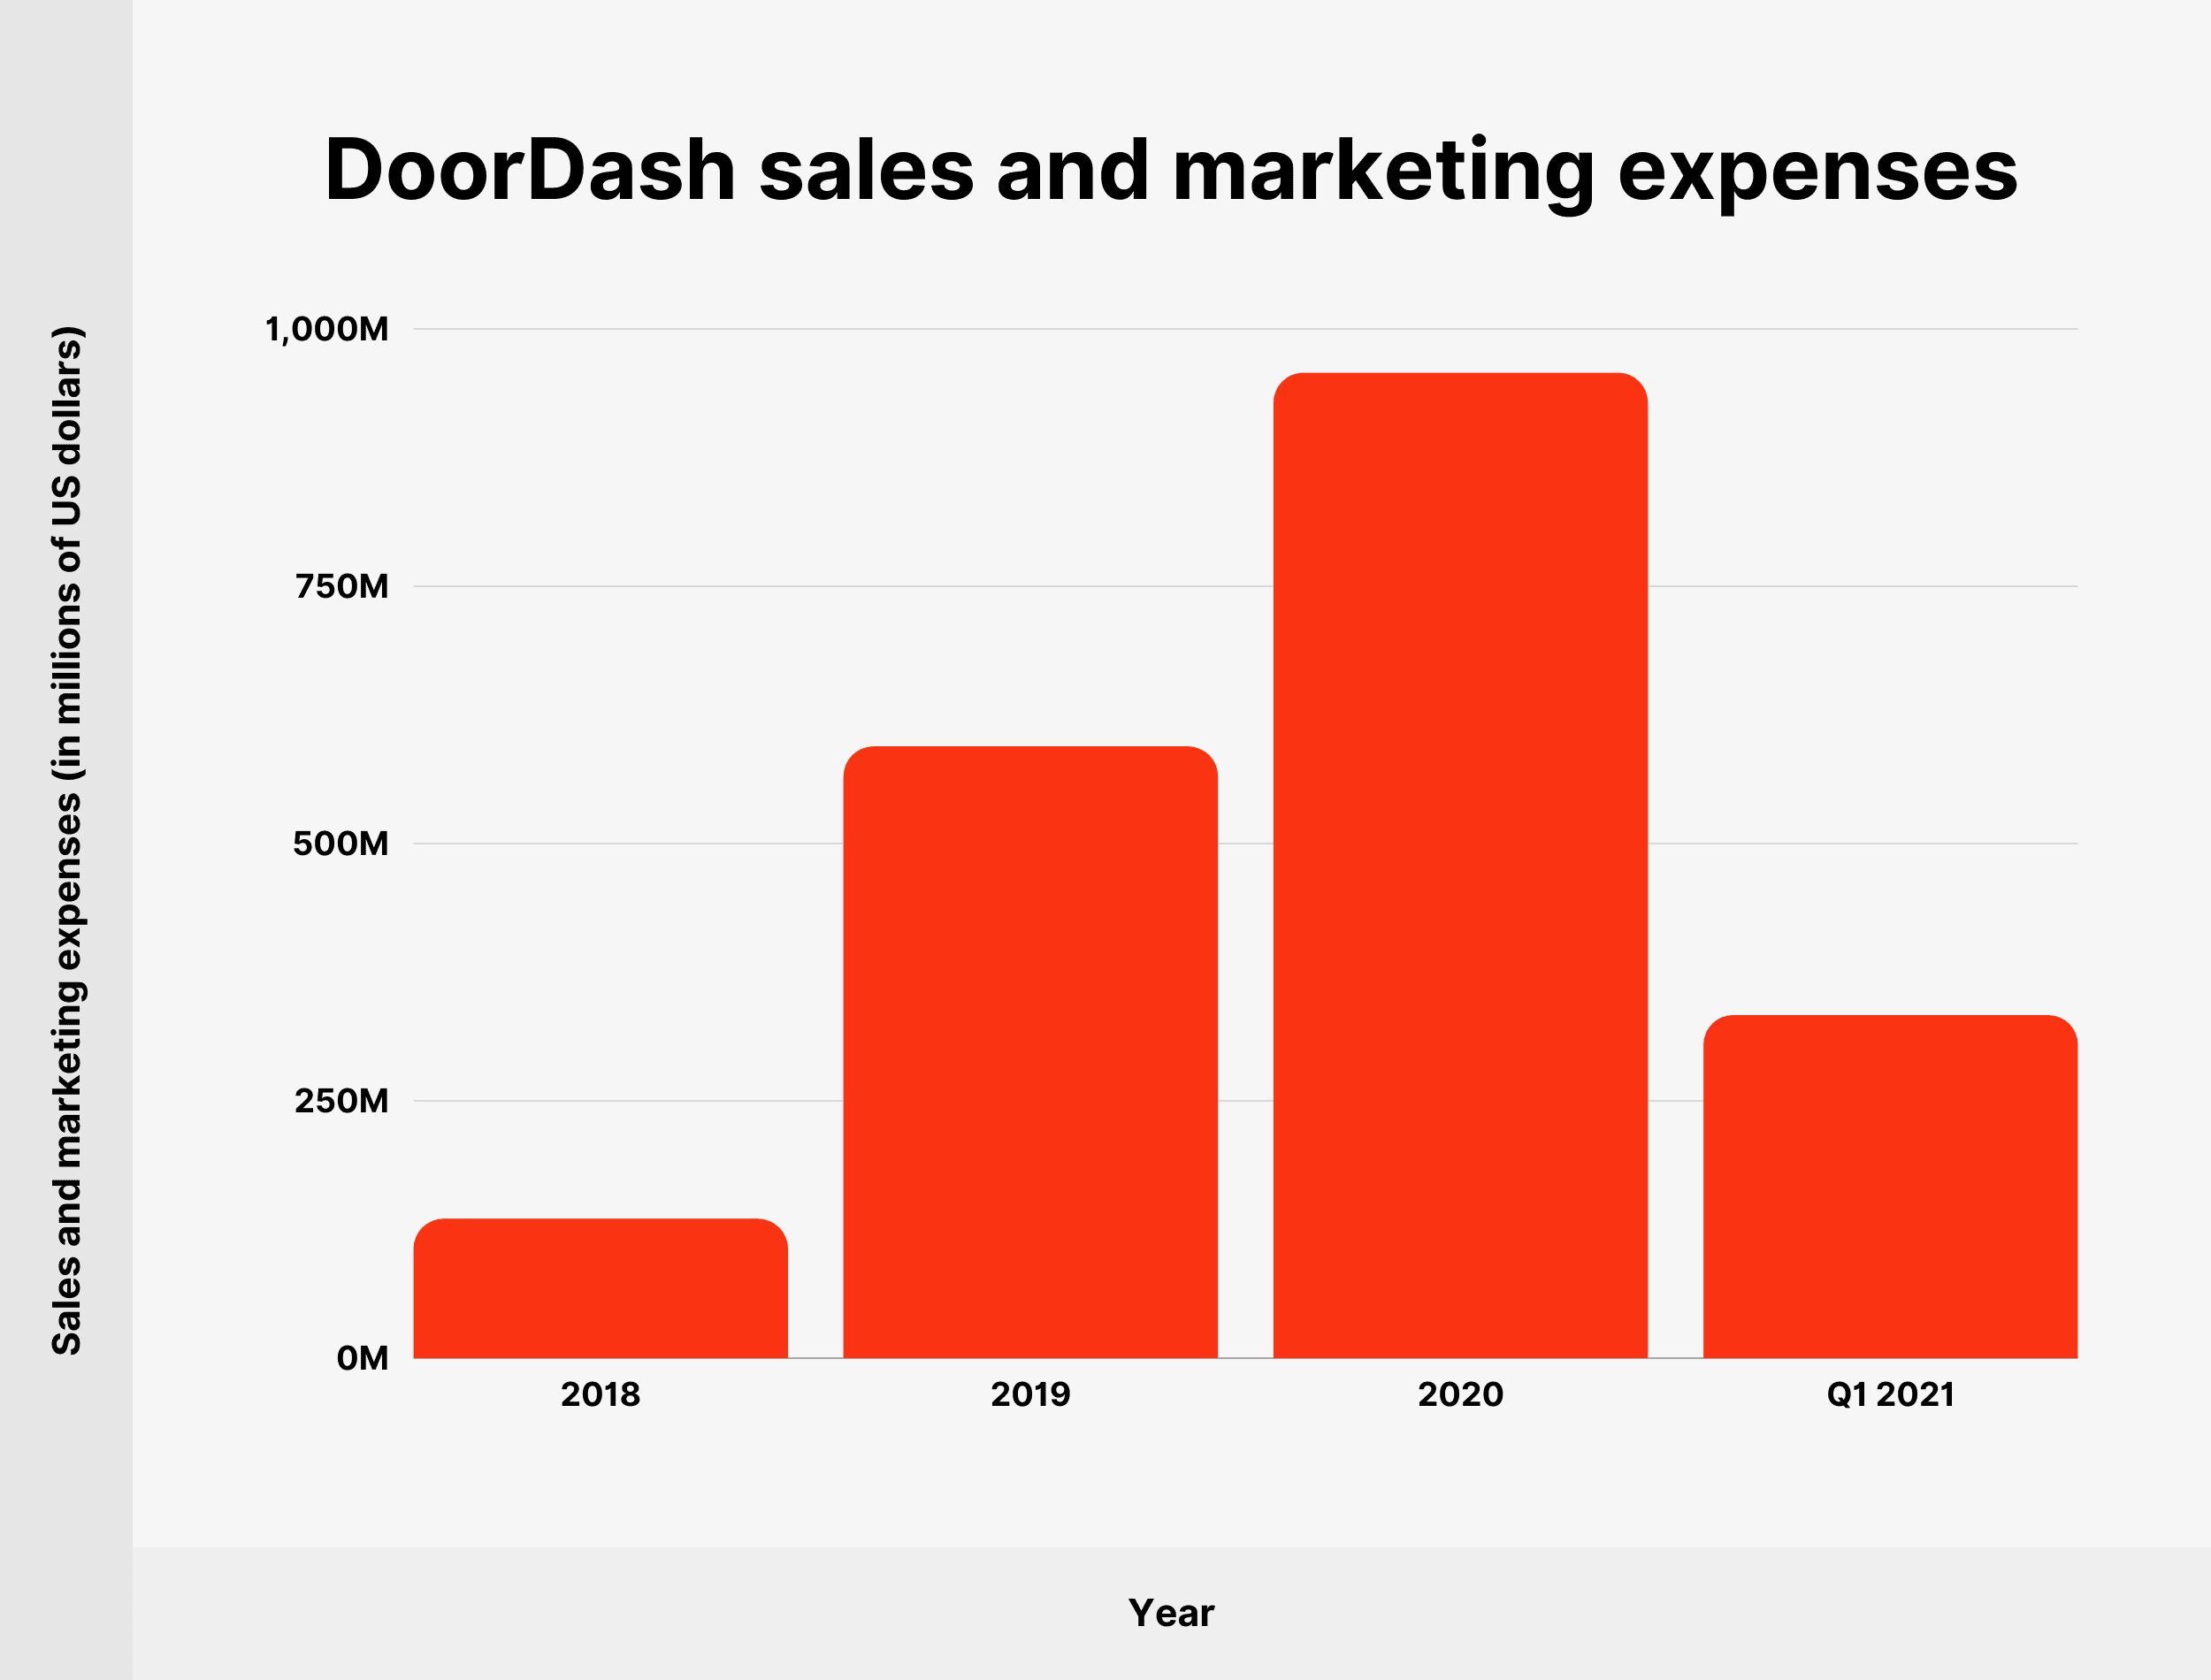 DoorDash sales and marketing expenses